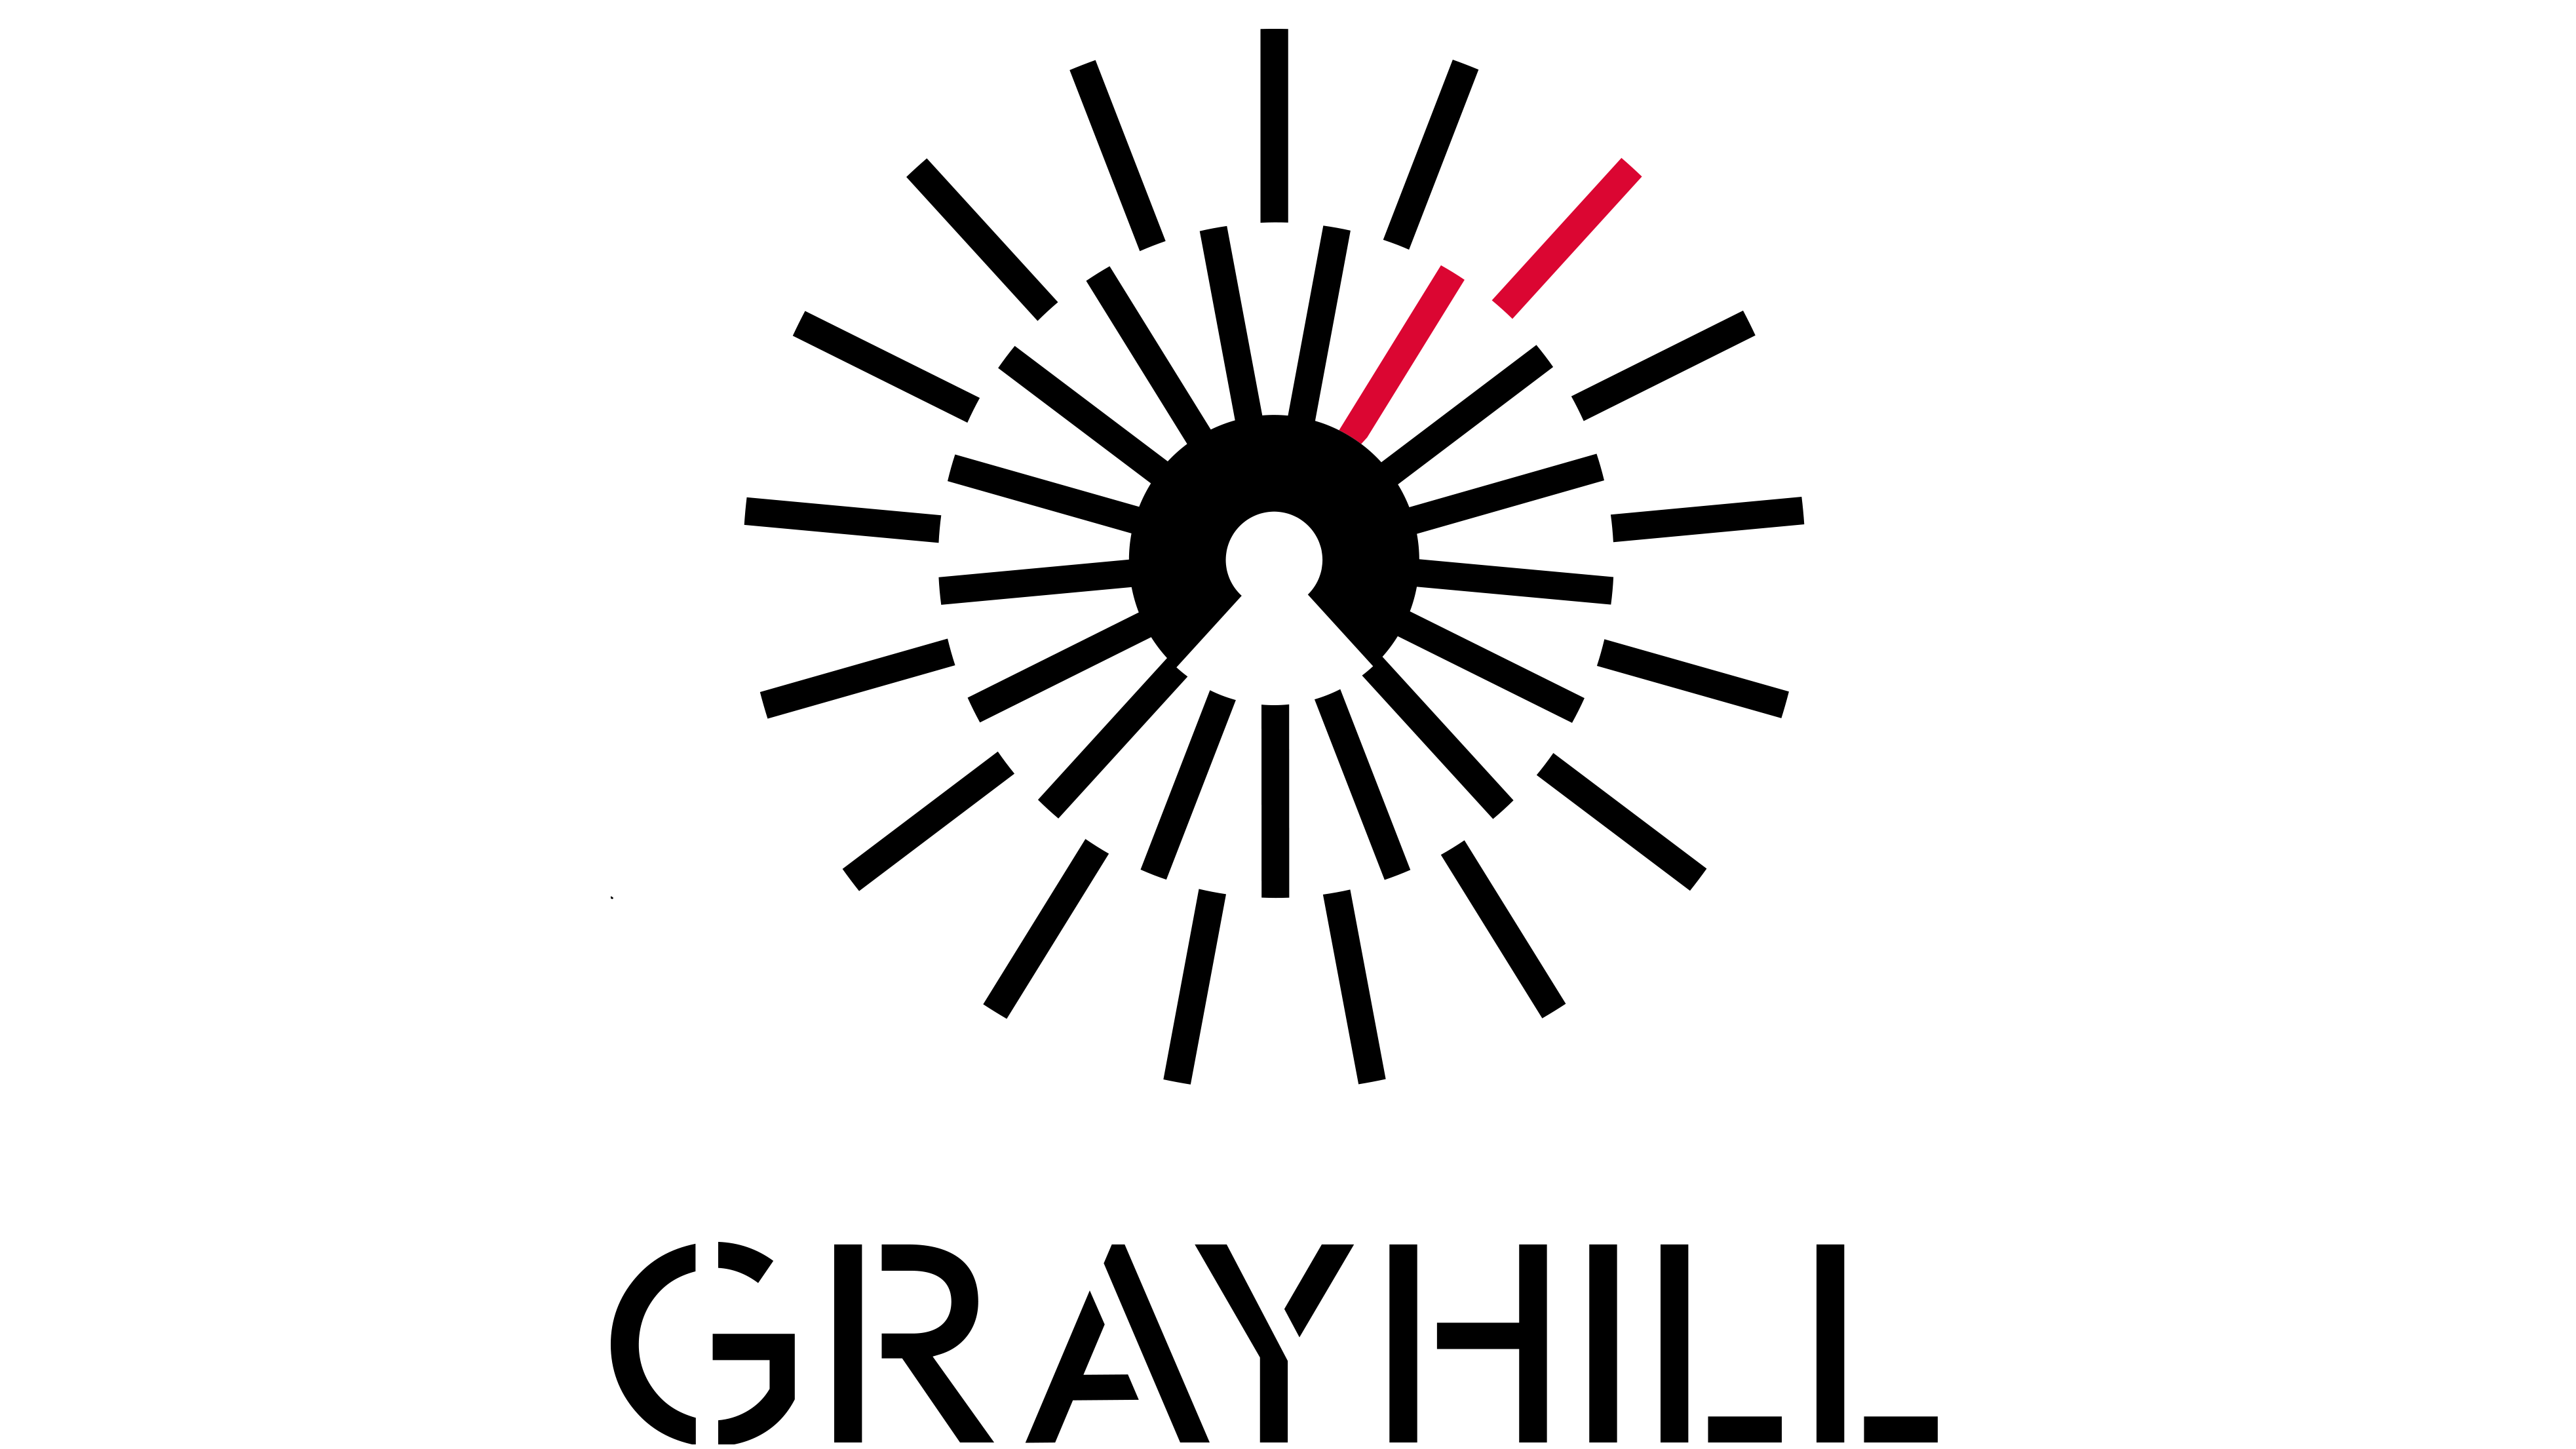 Grayhill